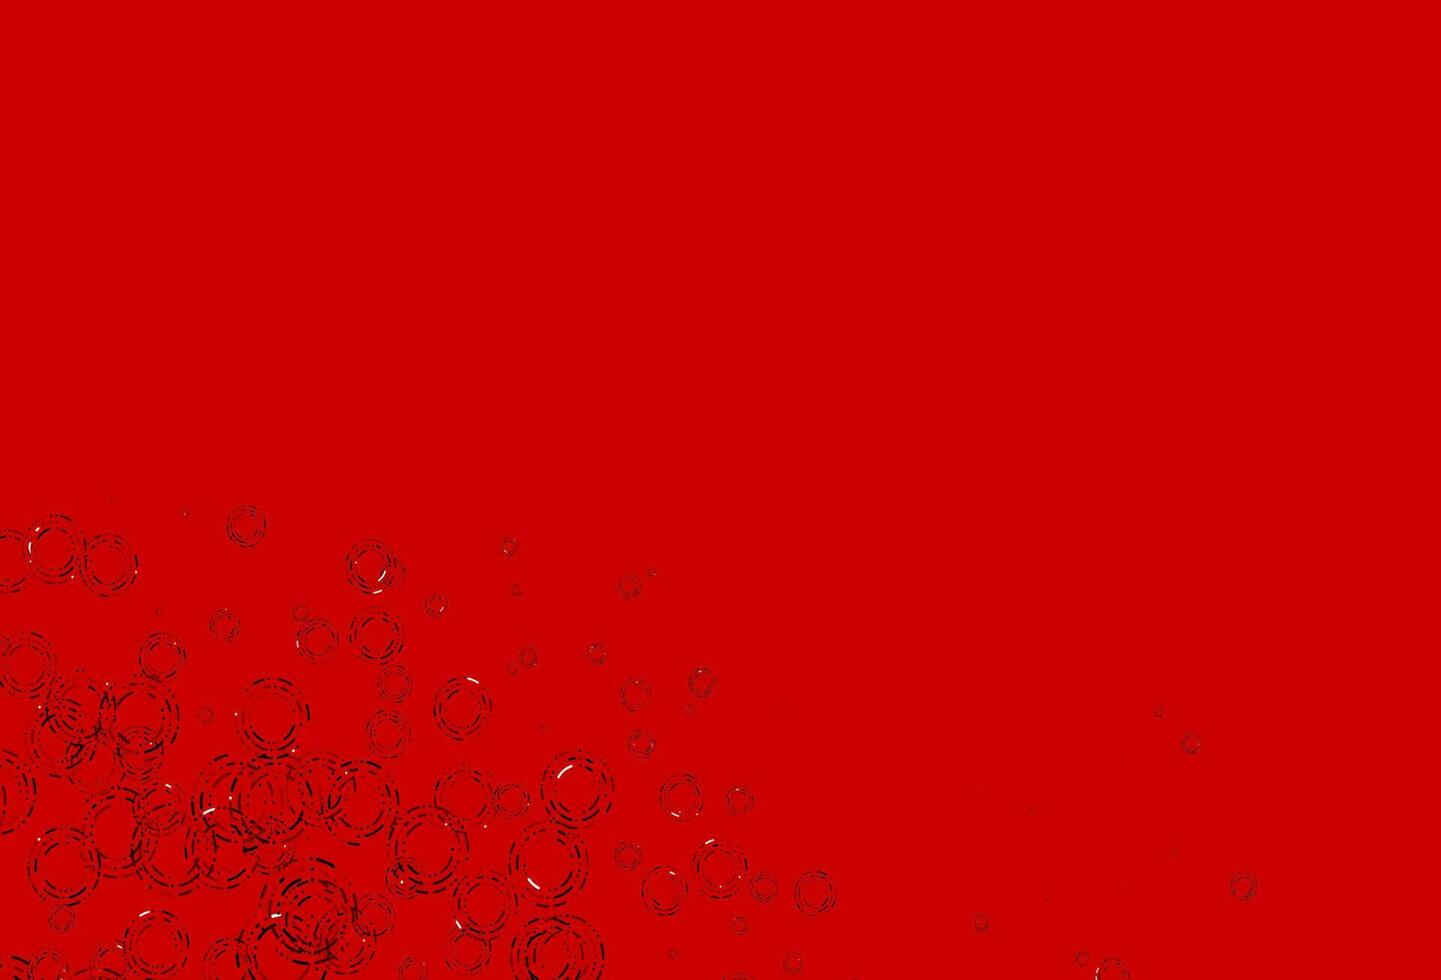 textura de vector rojo claro con discos.